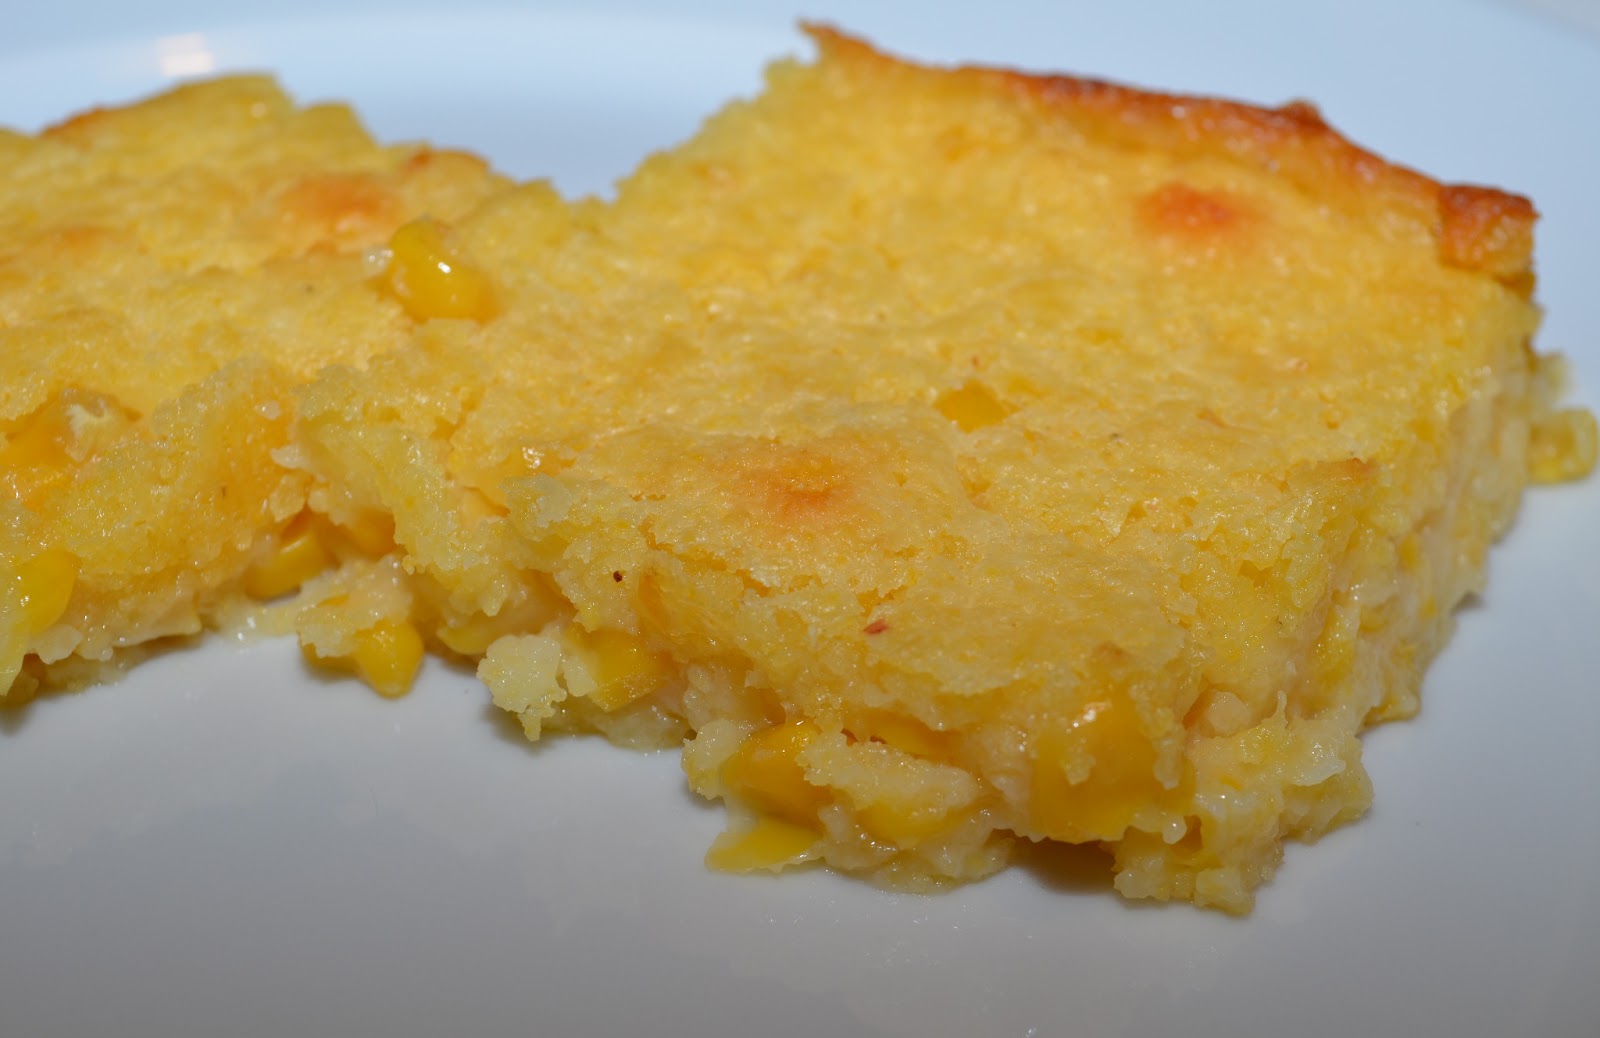 What is a recipe for creamed corn cornbread?